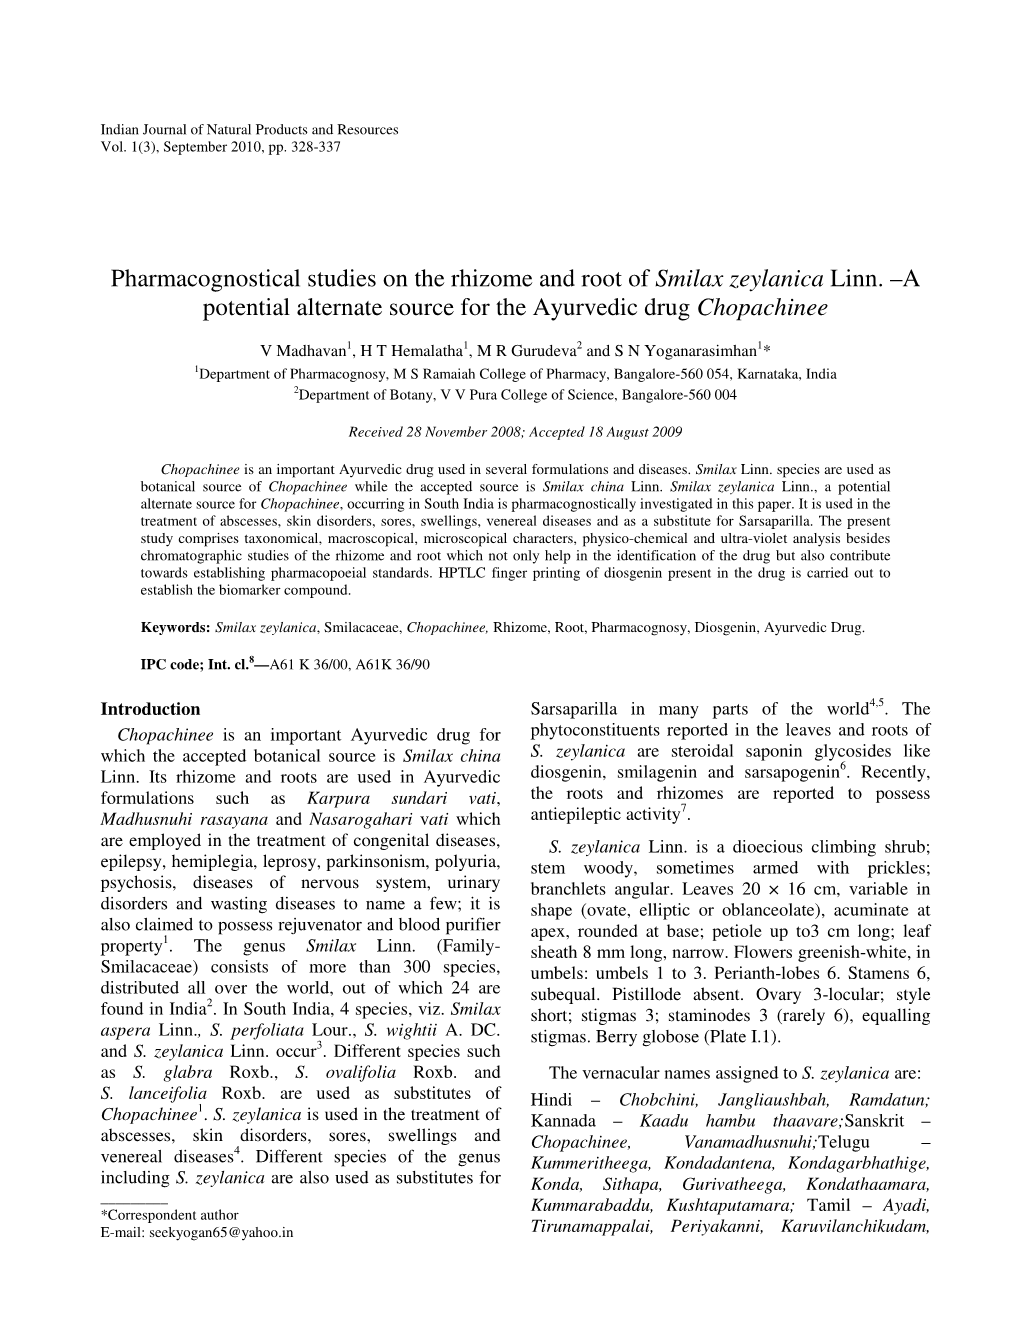 Pharmacognostical Studies on the Rhizome and Root of Smilax Zeylanica Linn